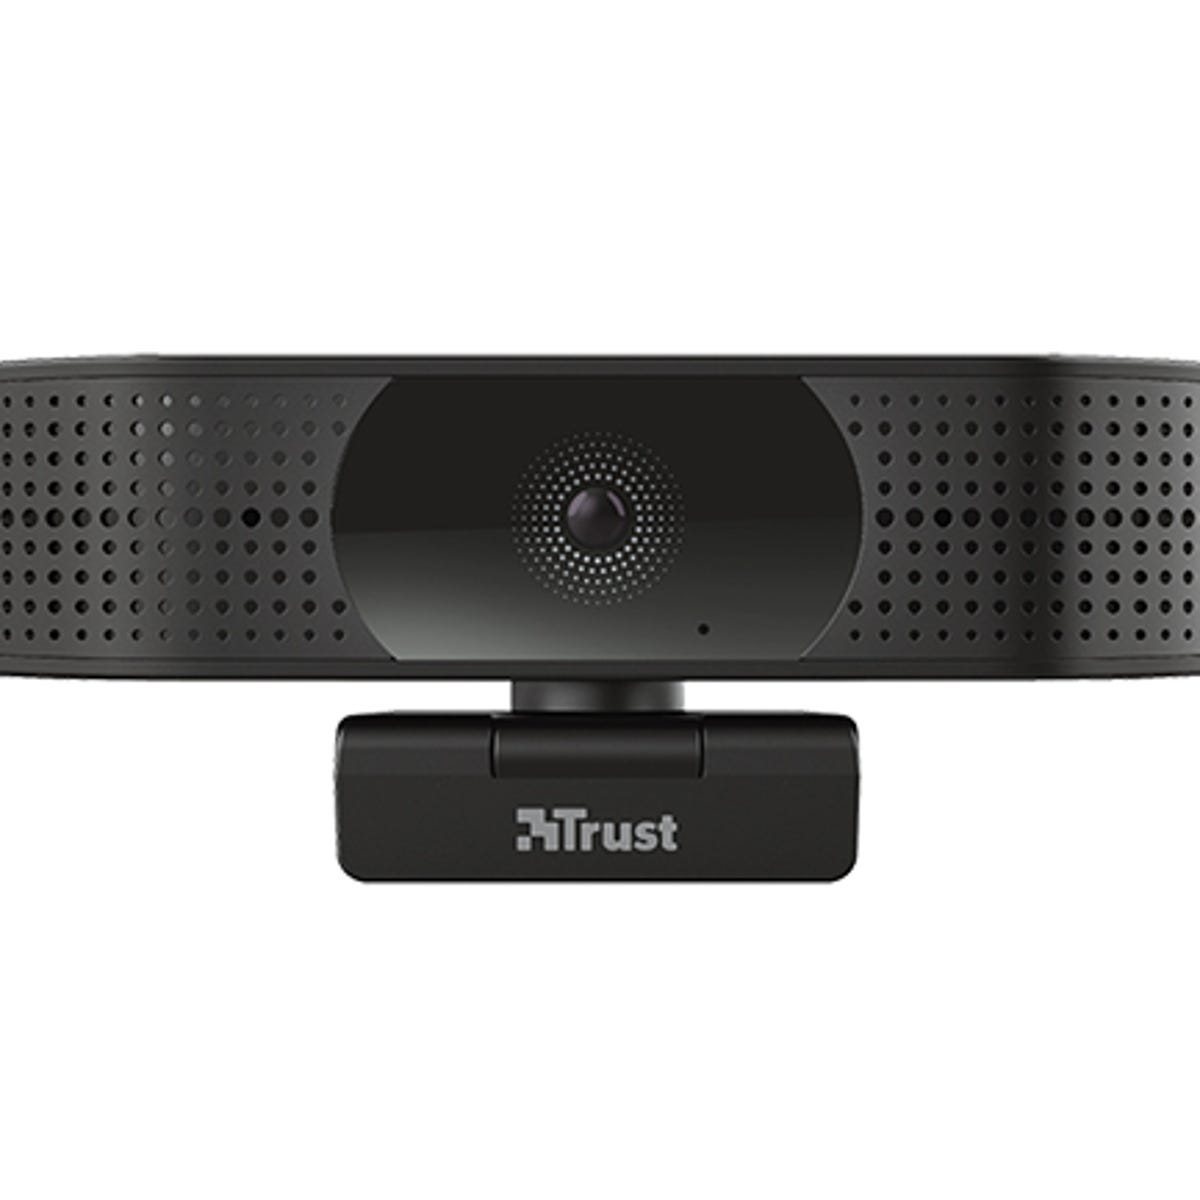 Trust Teza 4K Ultra HD Webcam: Hands on with an affordable 4K webcam | ZDNET